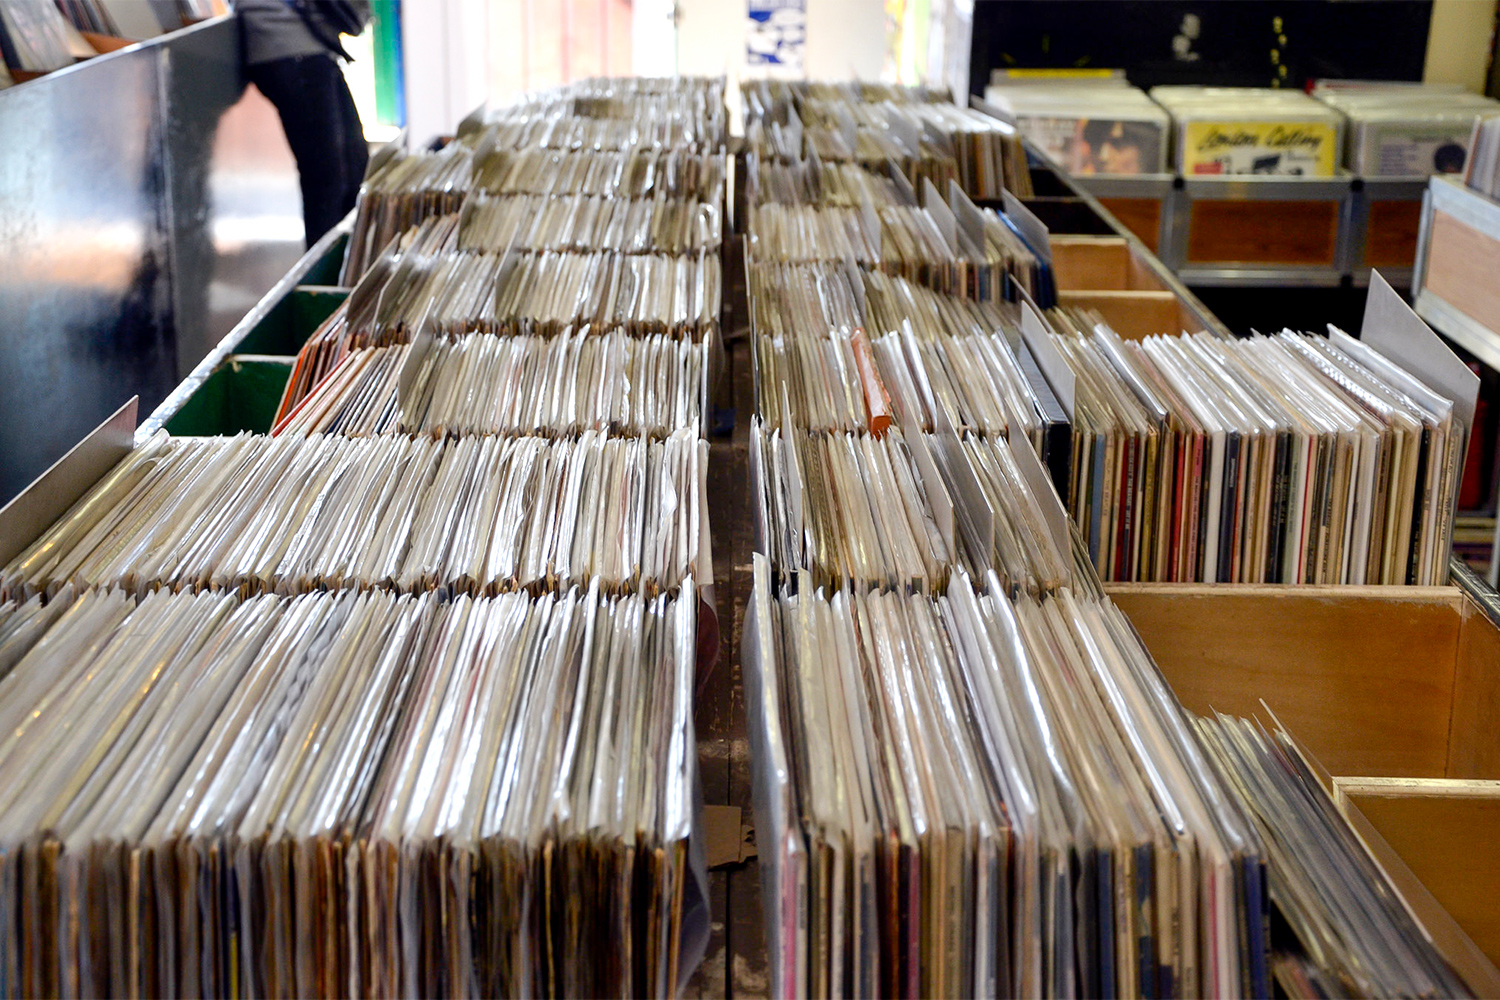 Bins of records at a record shop. 